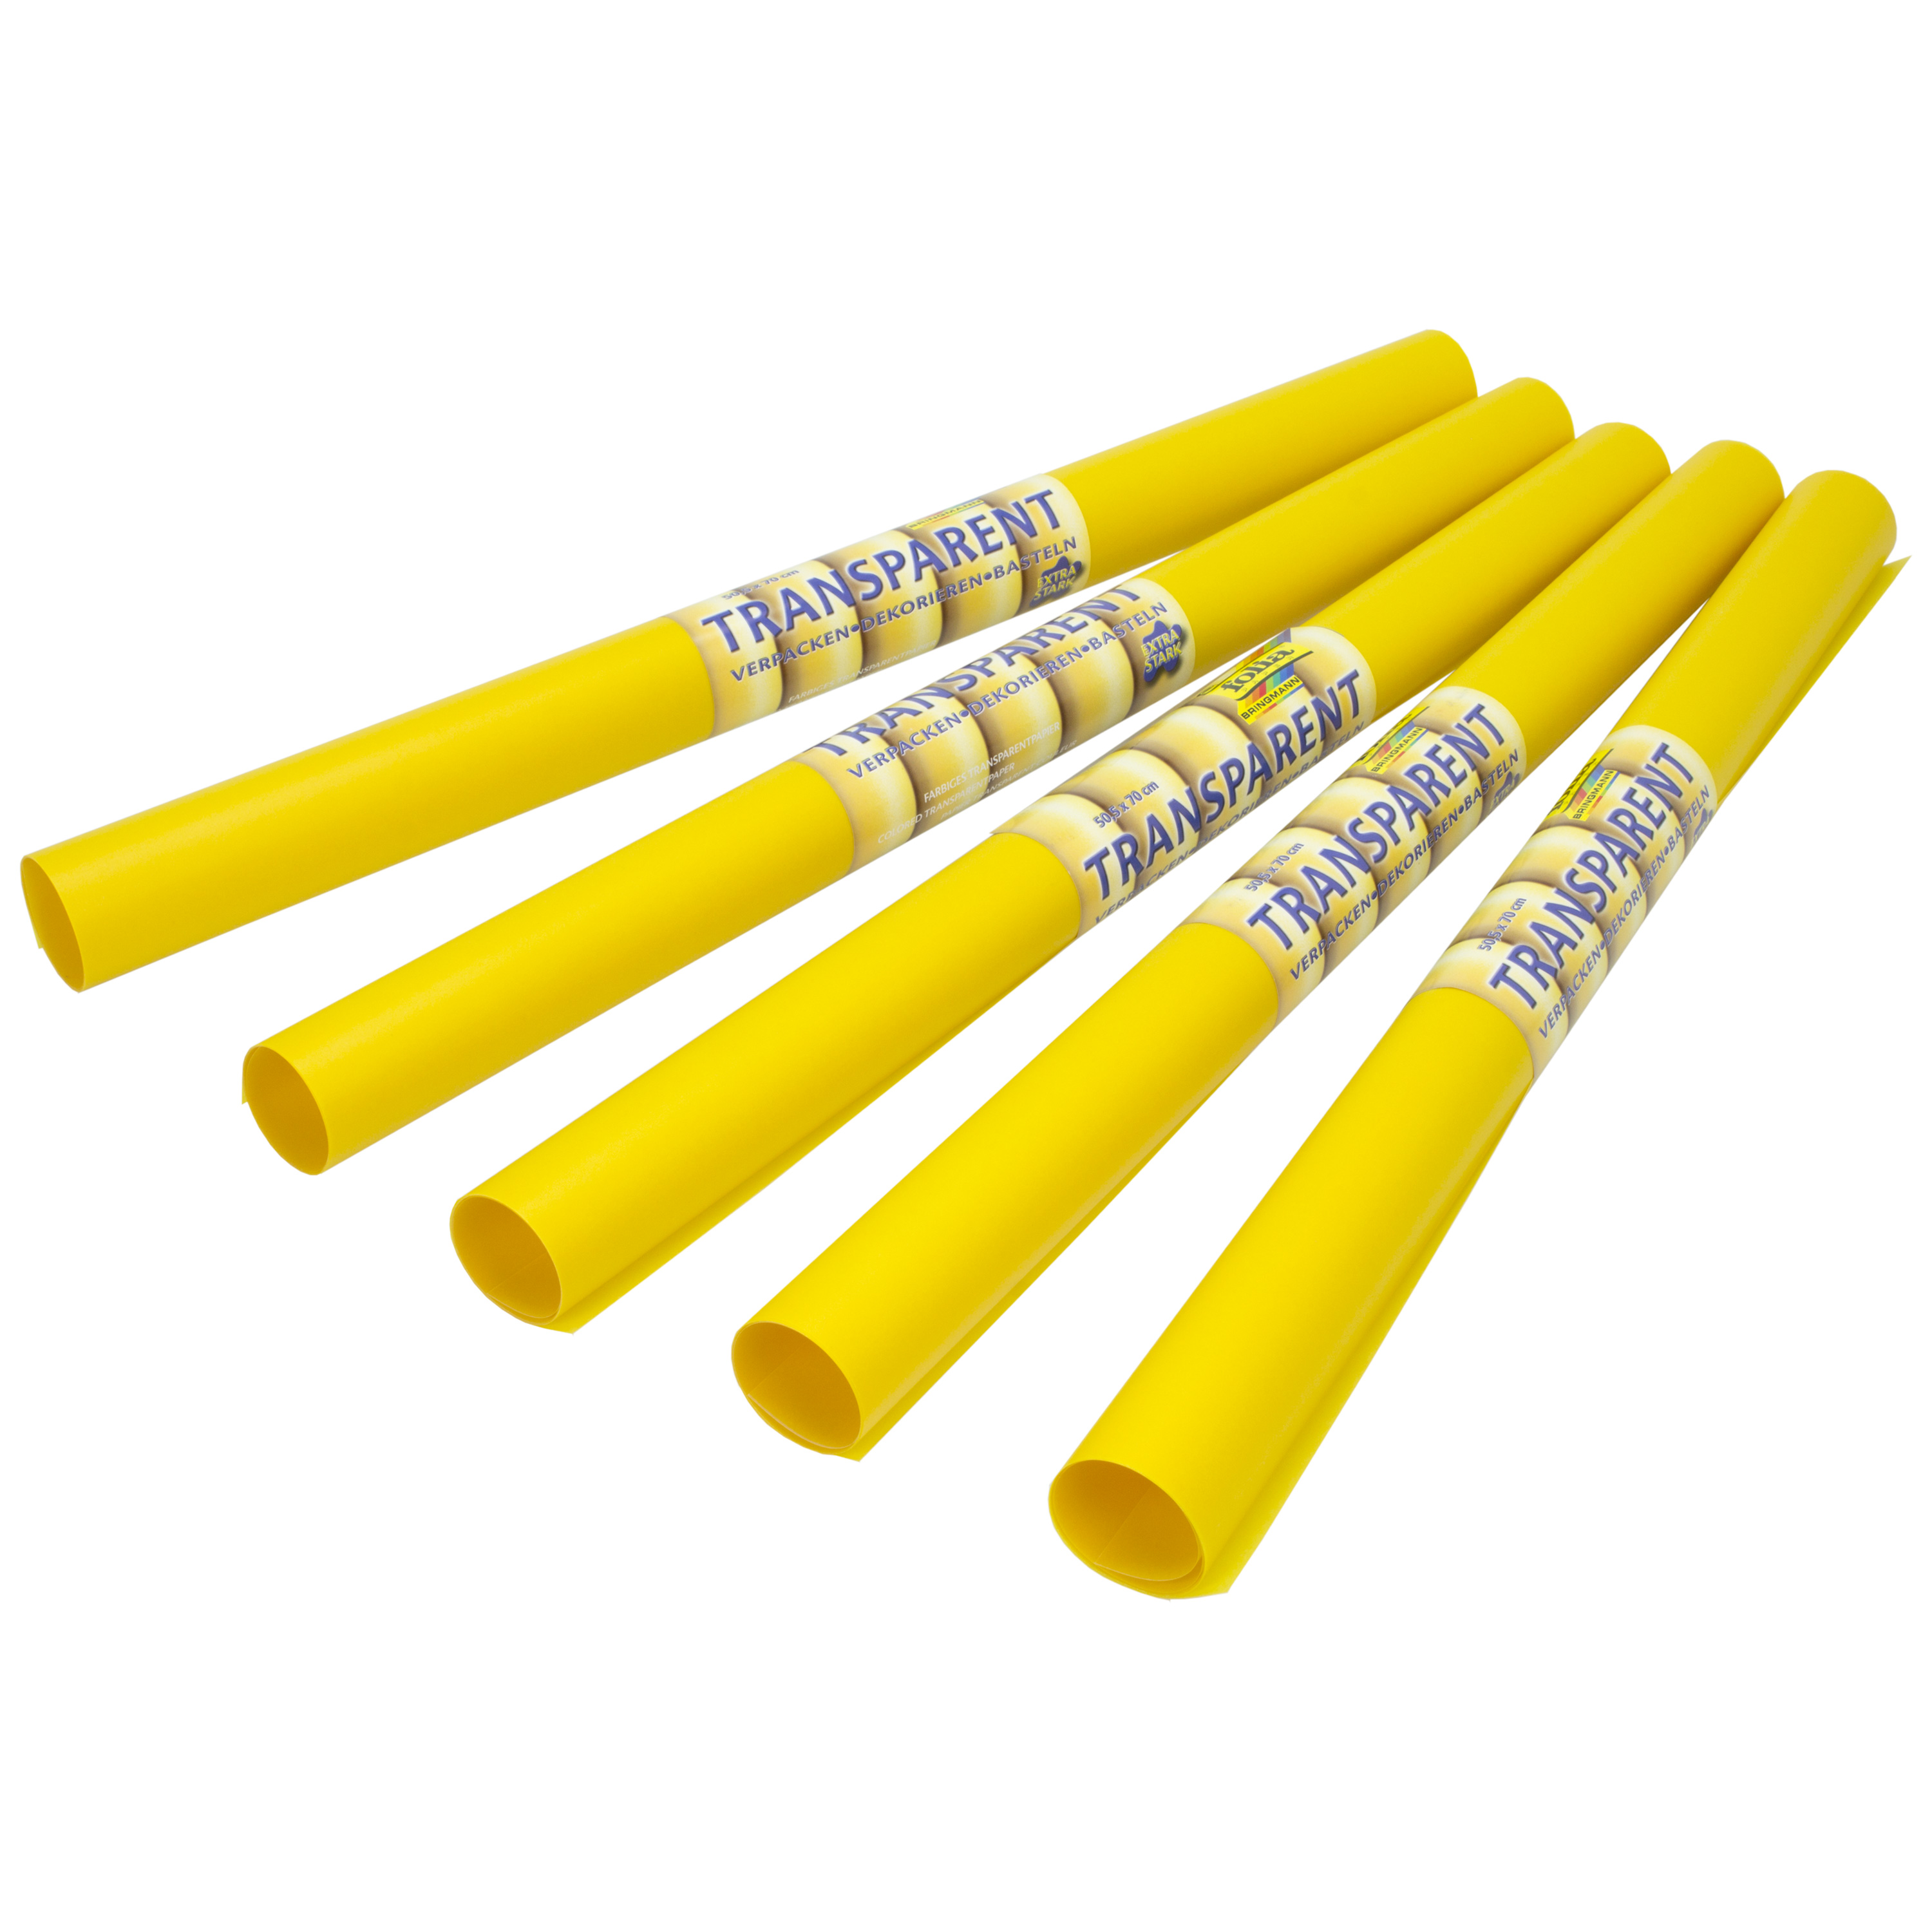 Transparentpapier stark gelb, 5 Rollen, 115 g/m²